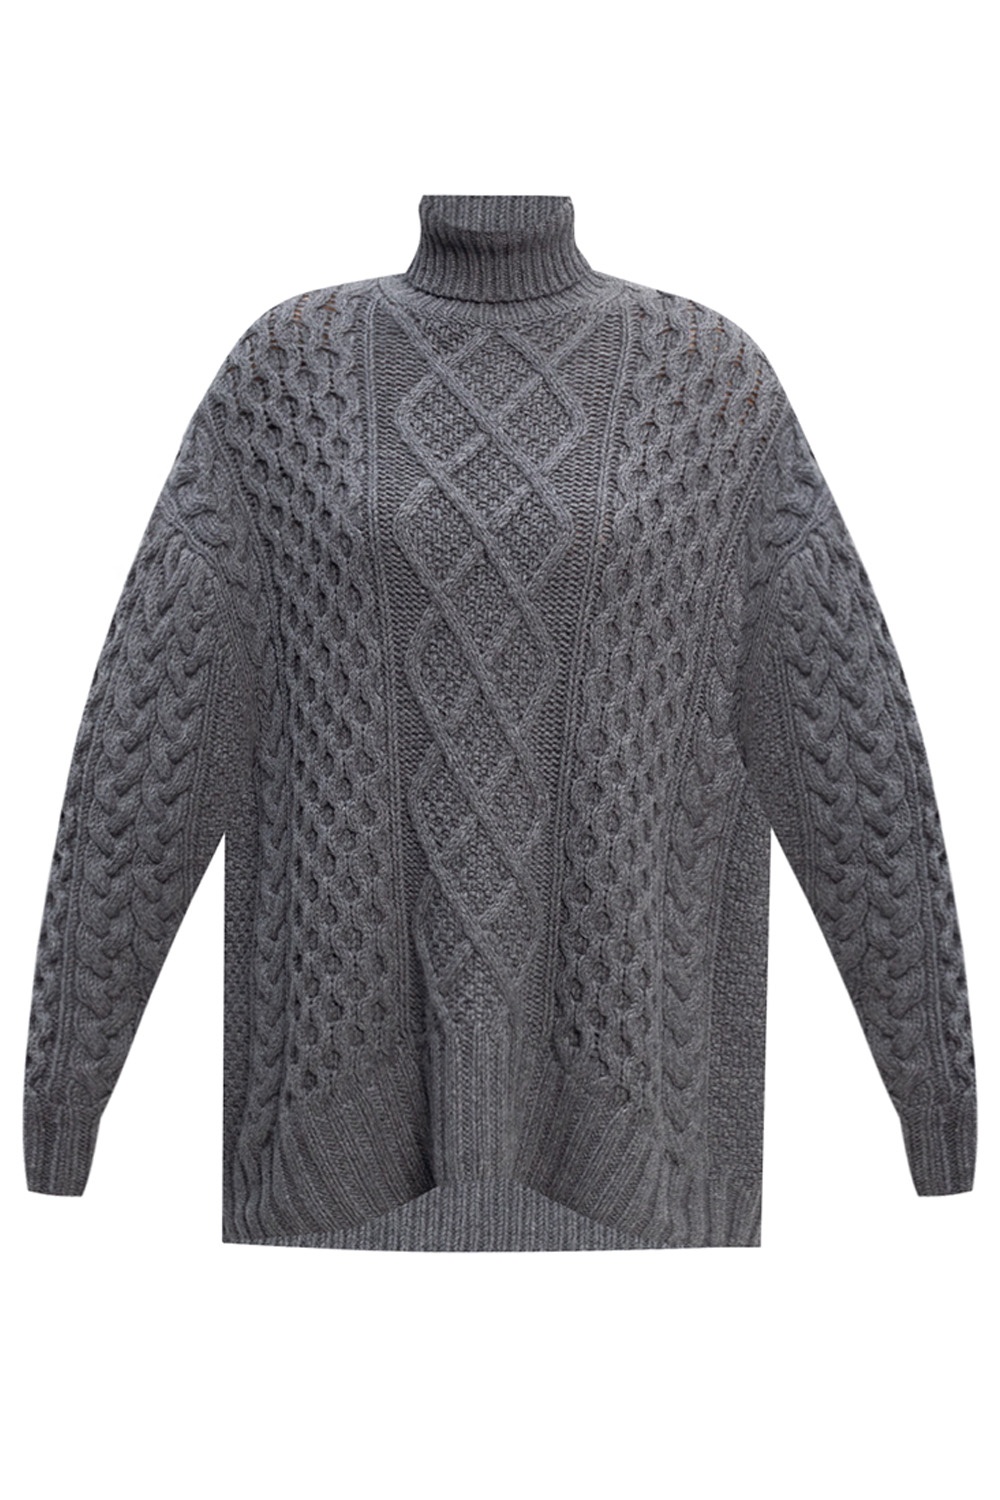 michael kors black turtleneck sweater